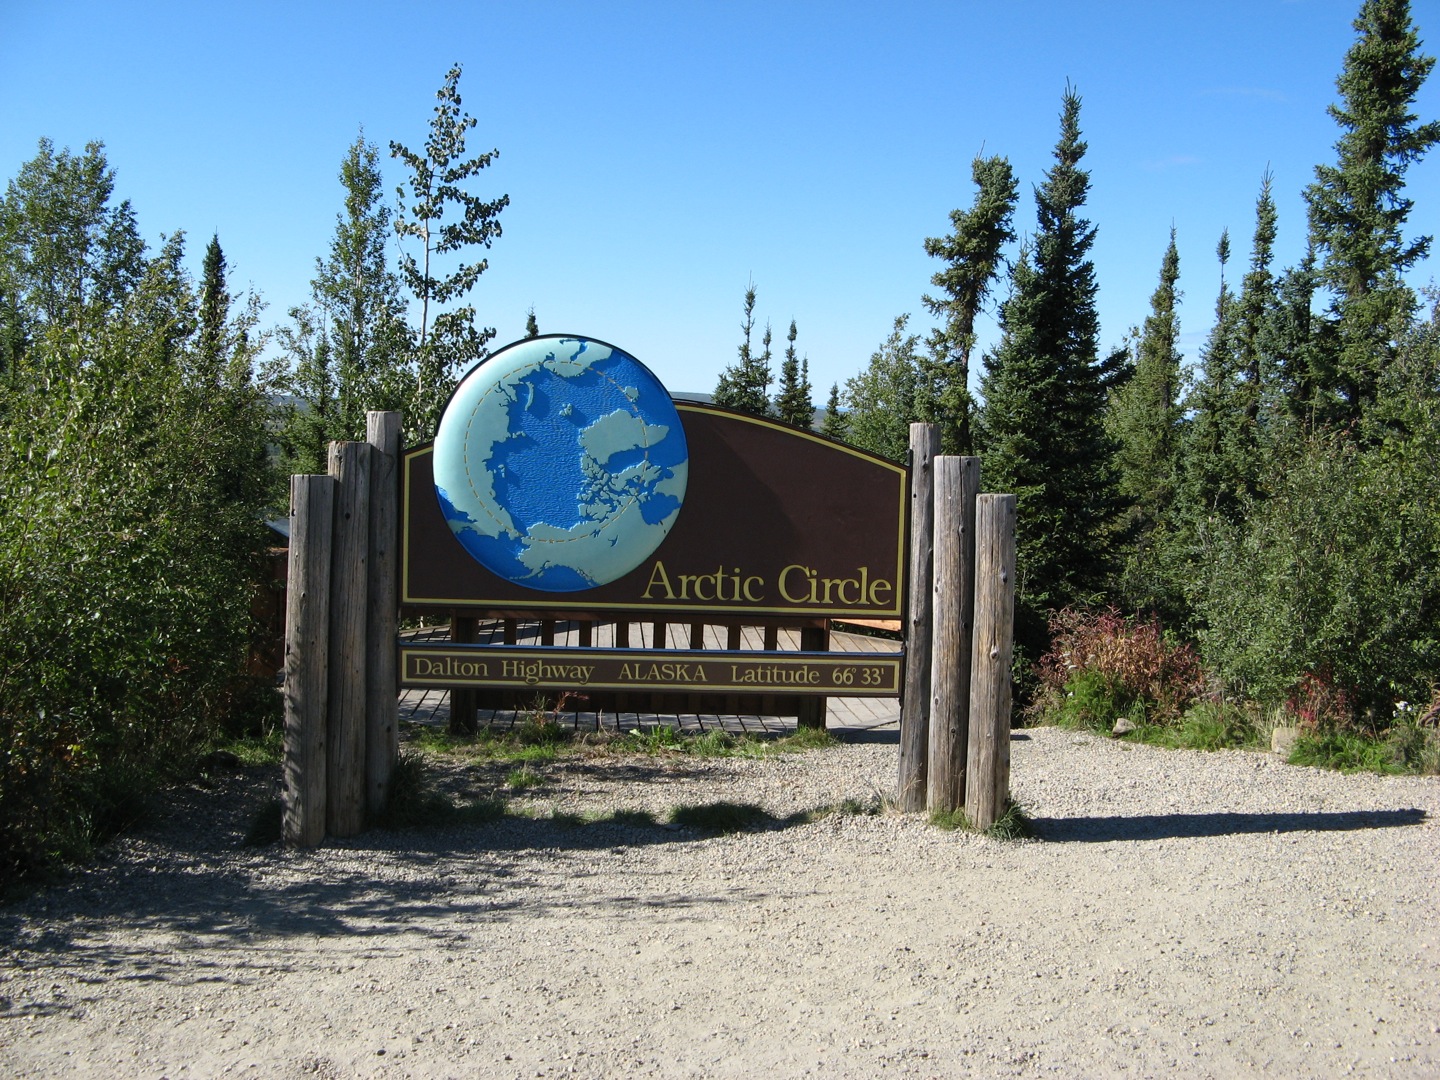 Arctic Circle sign, north of Fairbanks, Alaska.